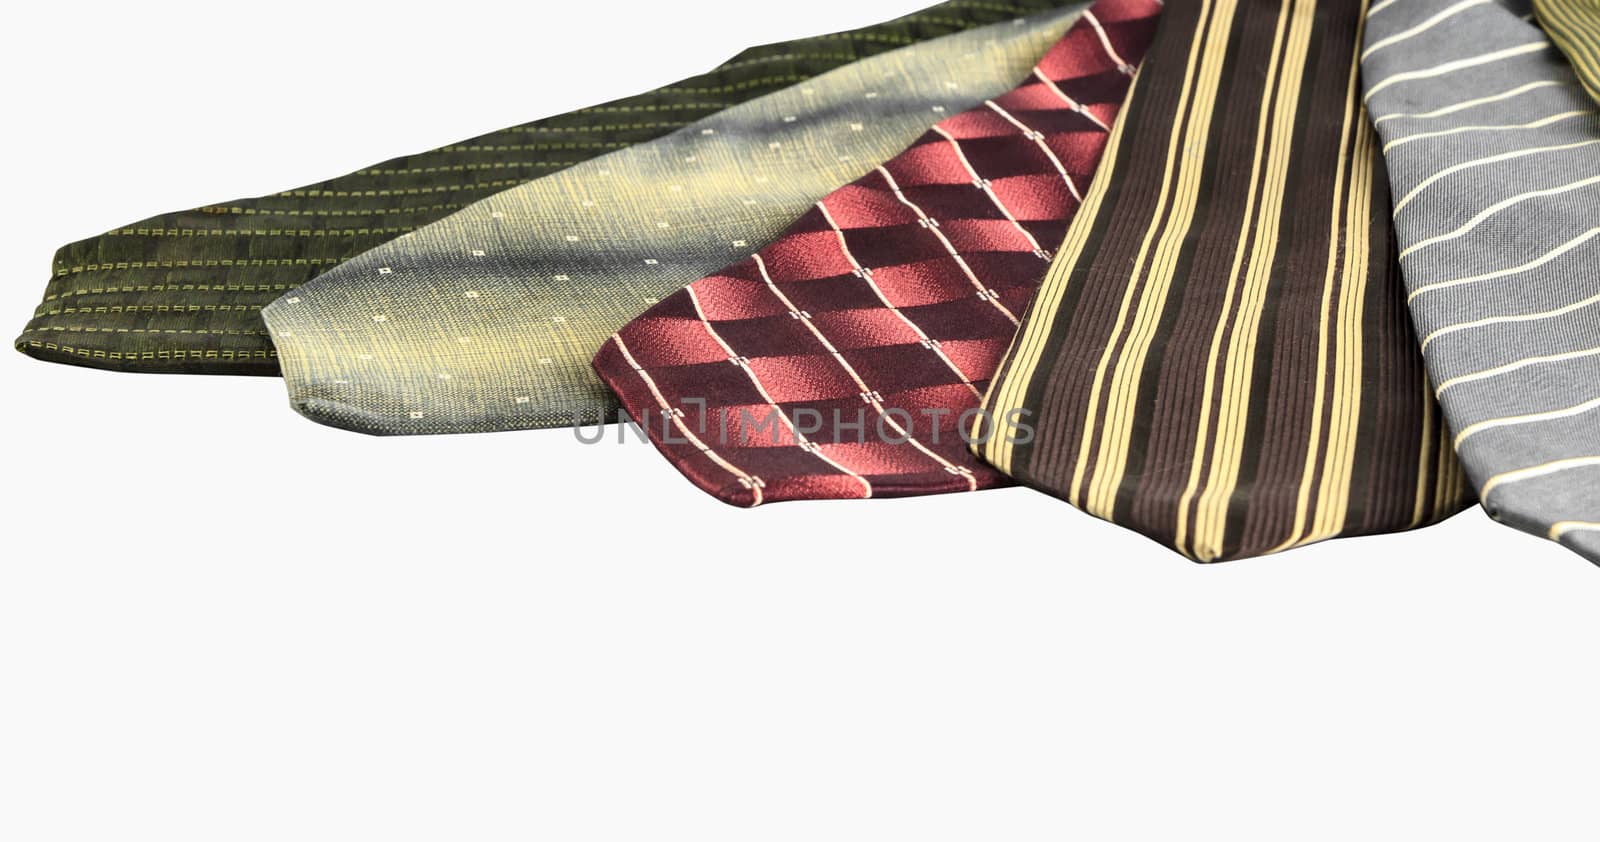 neckties stack by bunwit